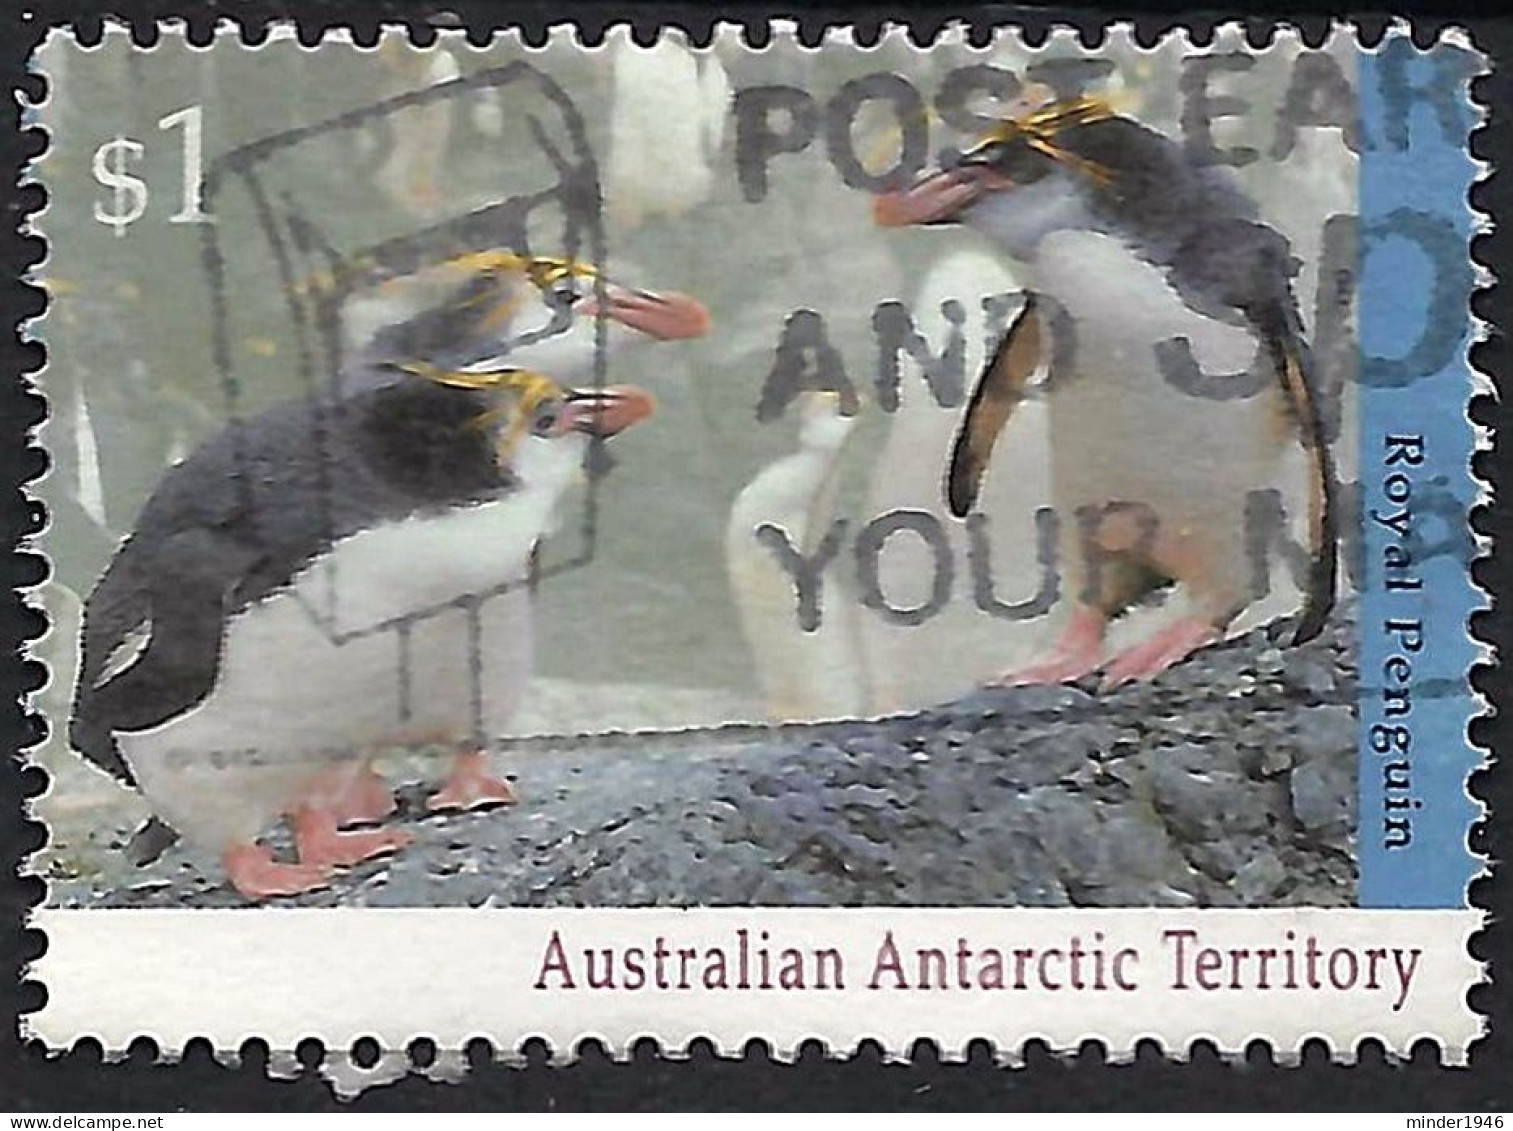 AUSTRALIAN ANTARCTIC TERRITORY (AAT) 1992 QEII $1 Multicoloured, Wildlife-Royal Penguin SG94 Used - Usados